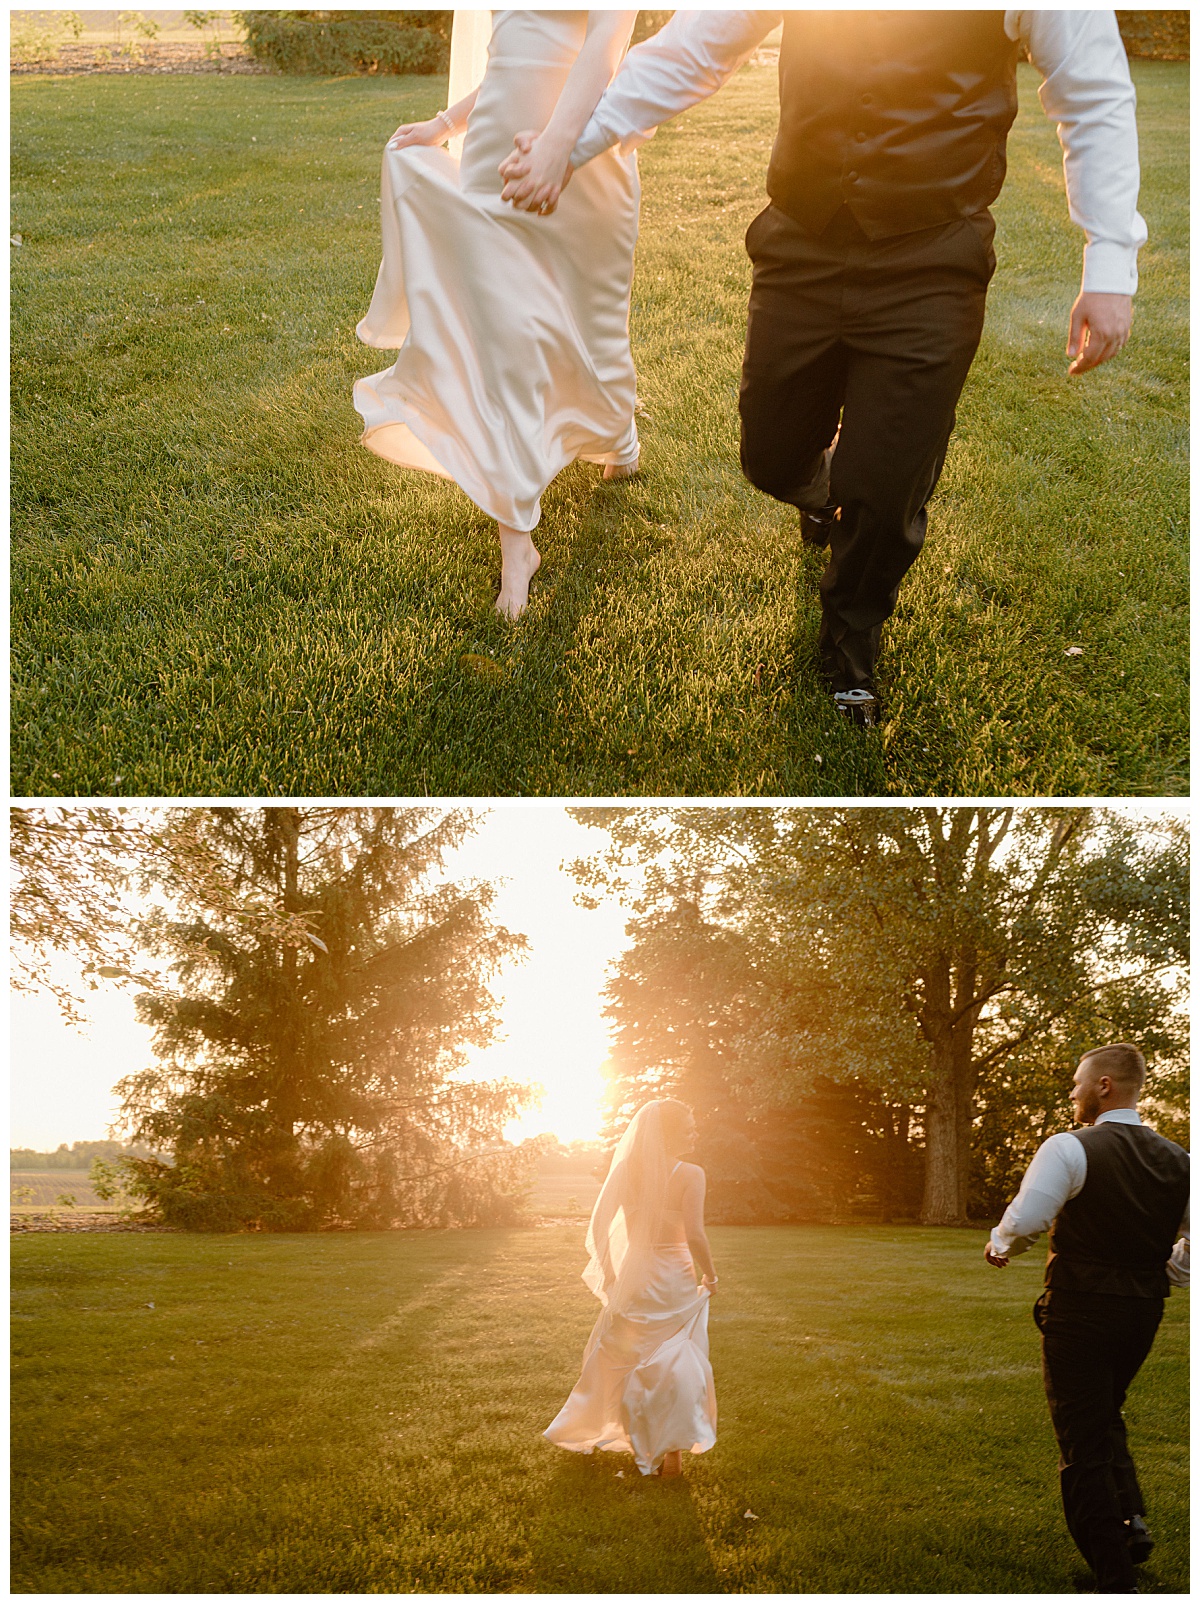 man and woman run through field during golden hour at backyard summer celebration